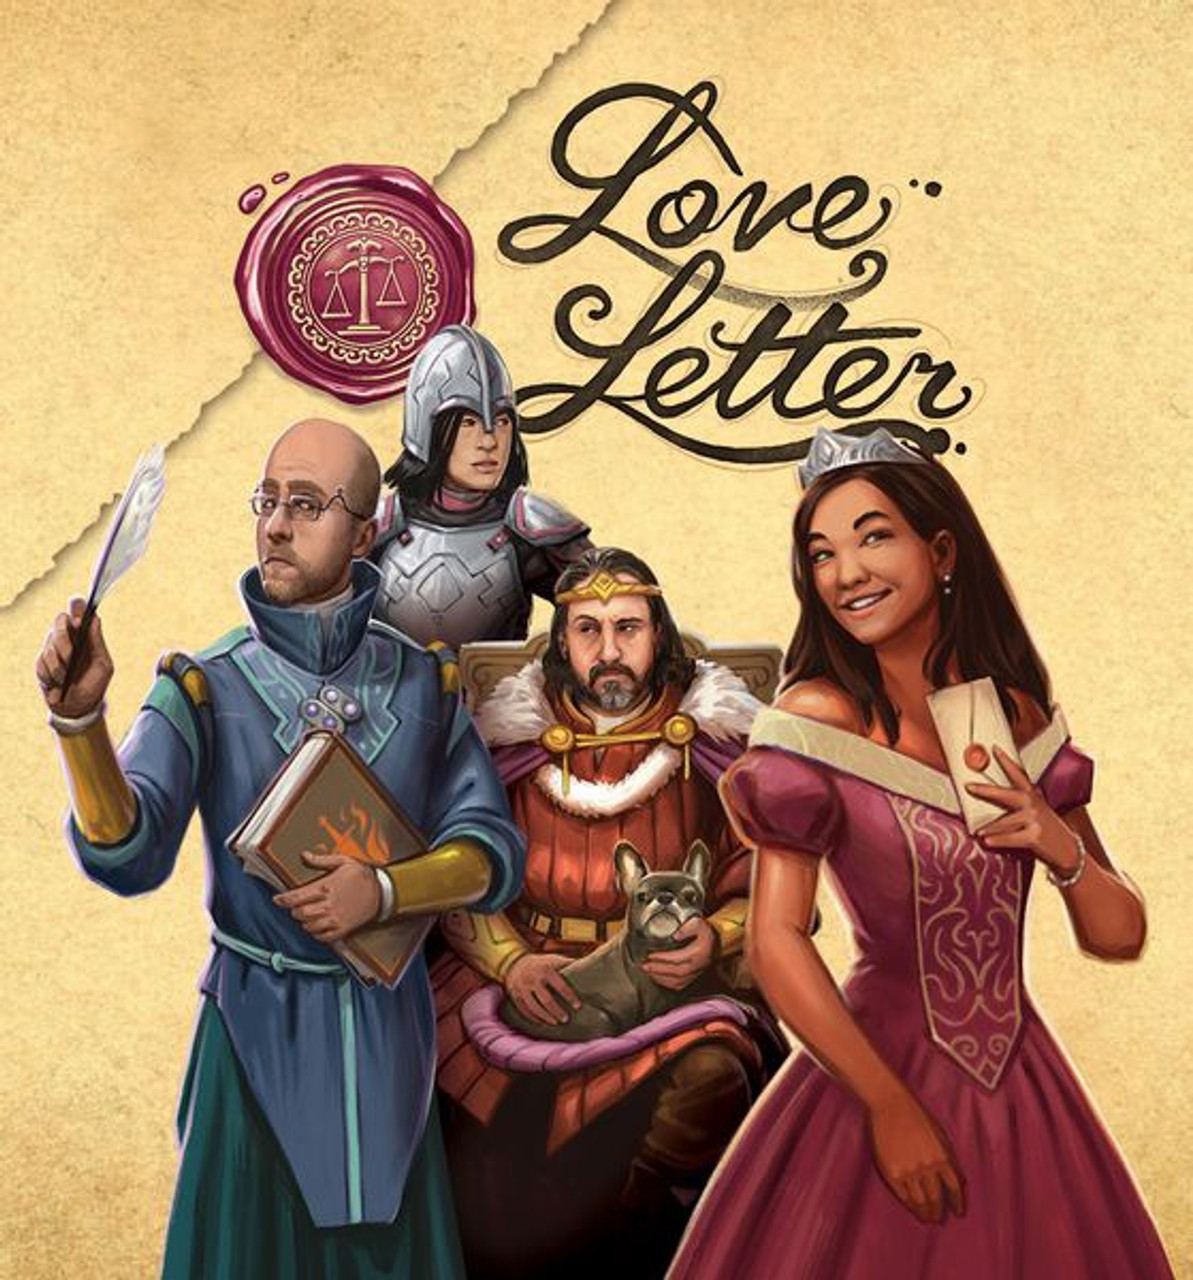 Love Letter, Board Game